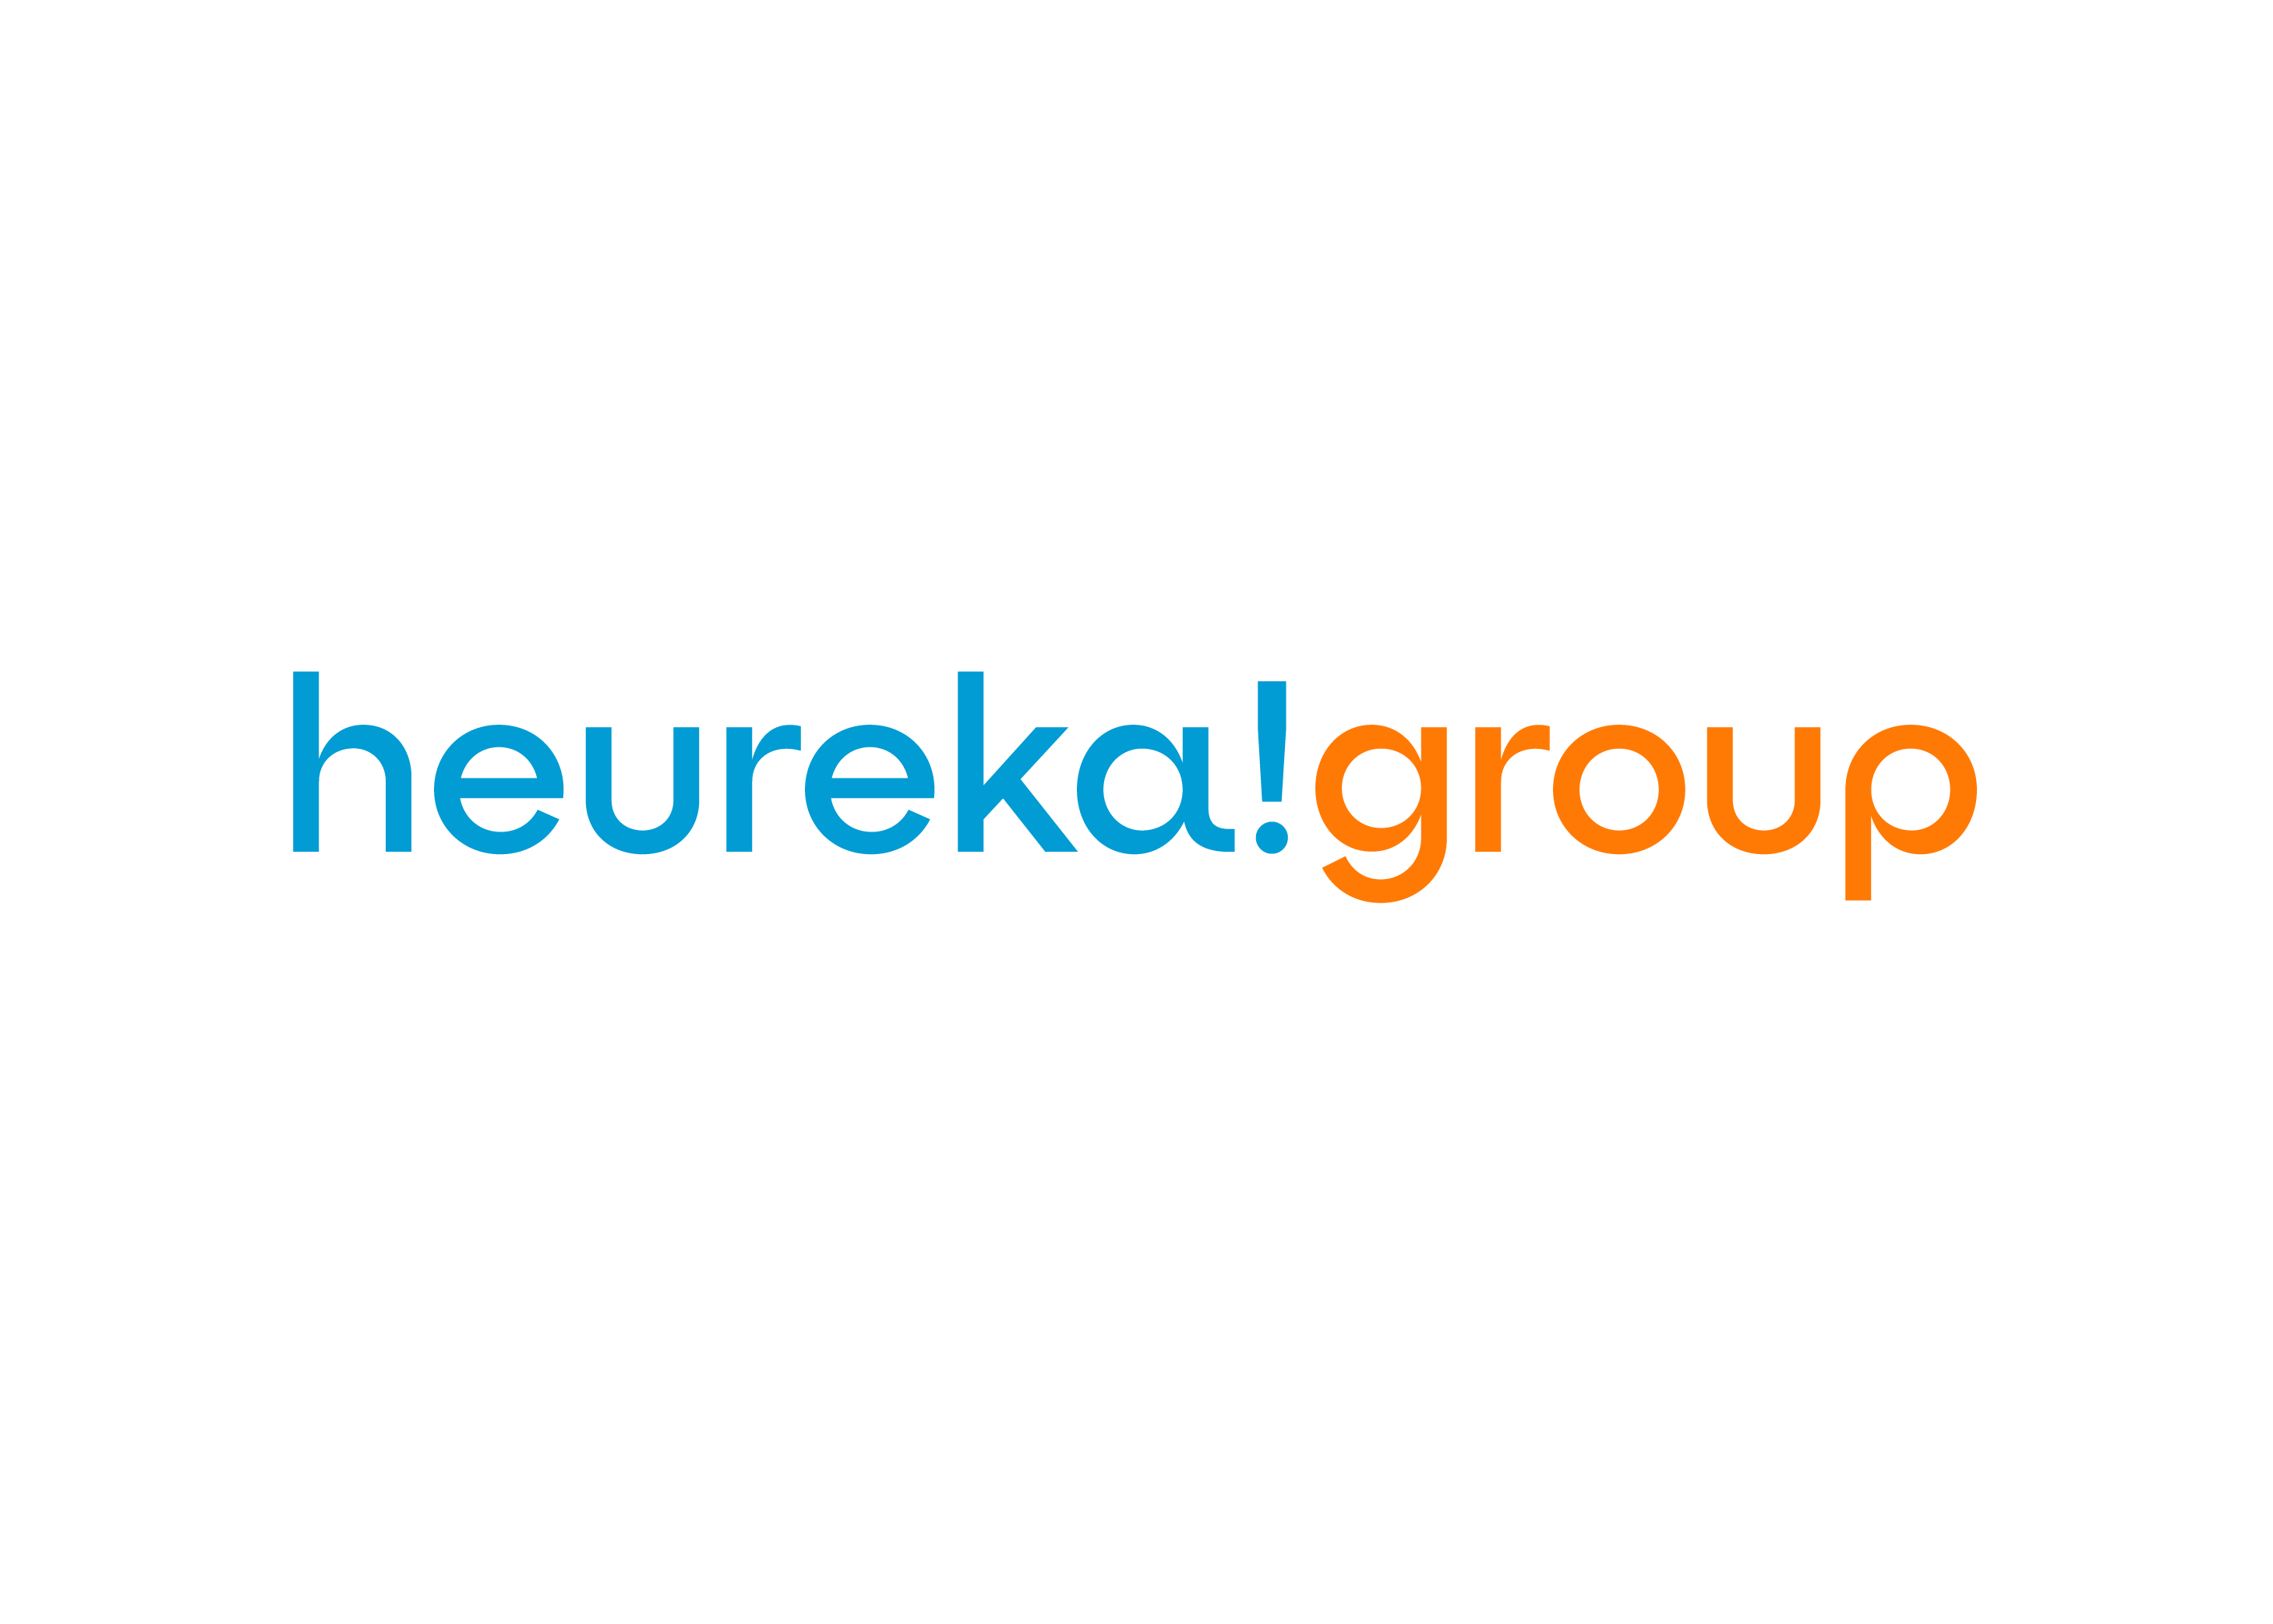 Heureka Group logo (png, 21 kB)